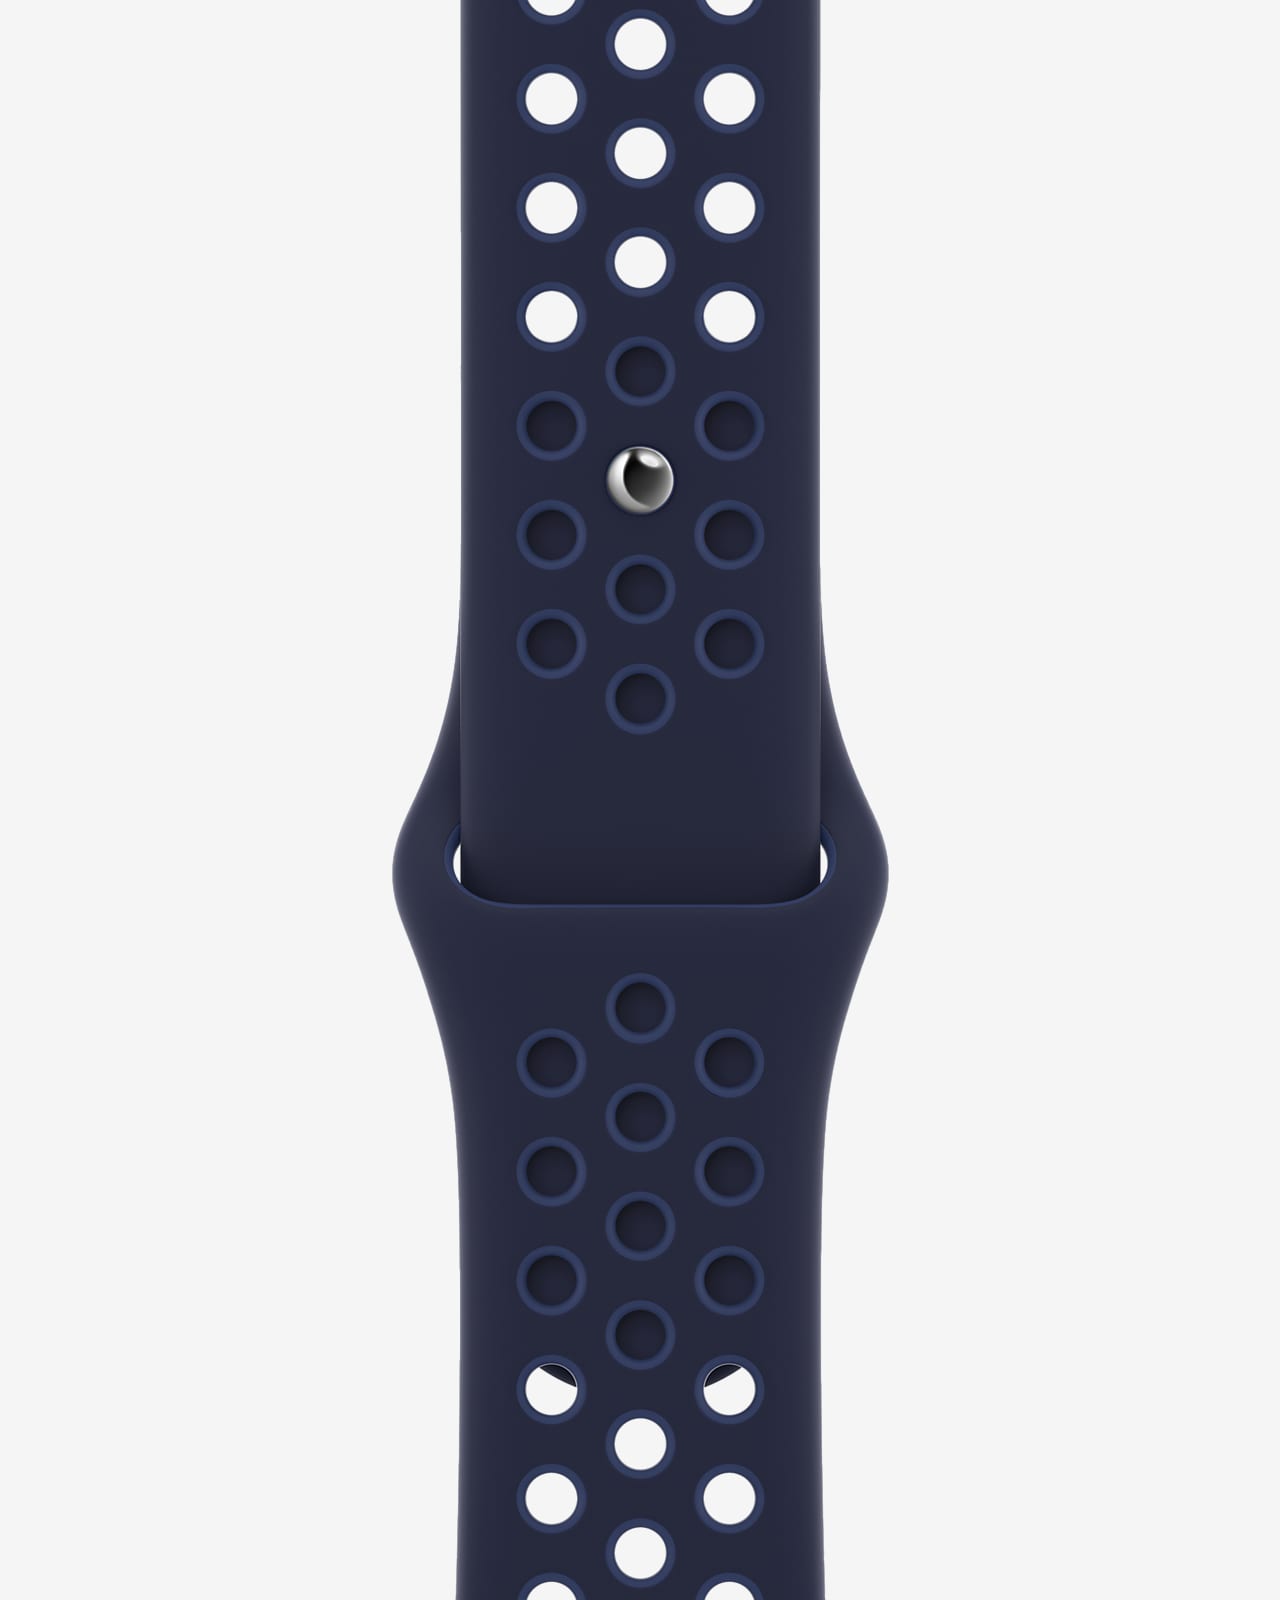 Bracelet Sport Nike Bleu marine nuit/Bleu marine mystique 41 mm  - Regular